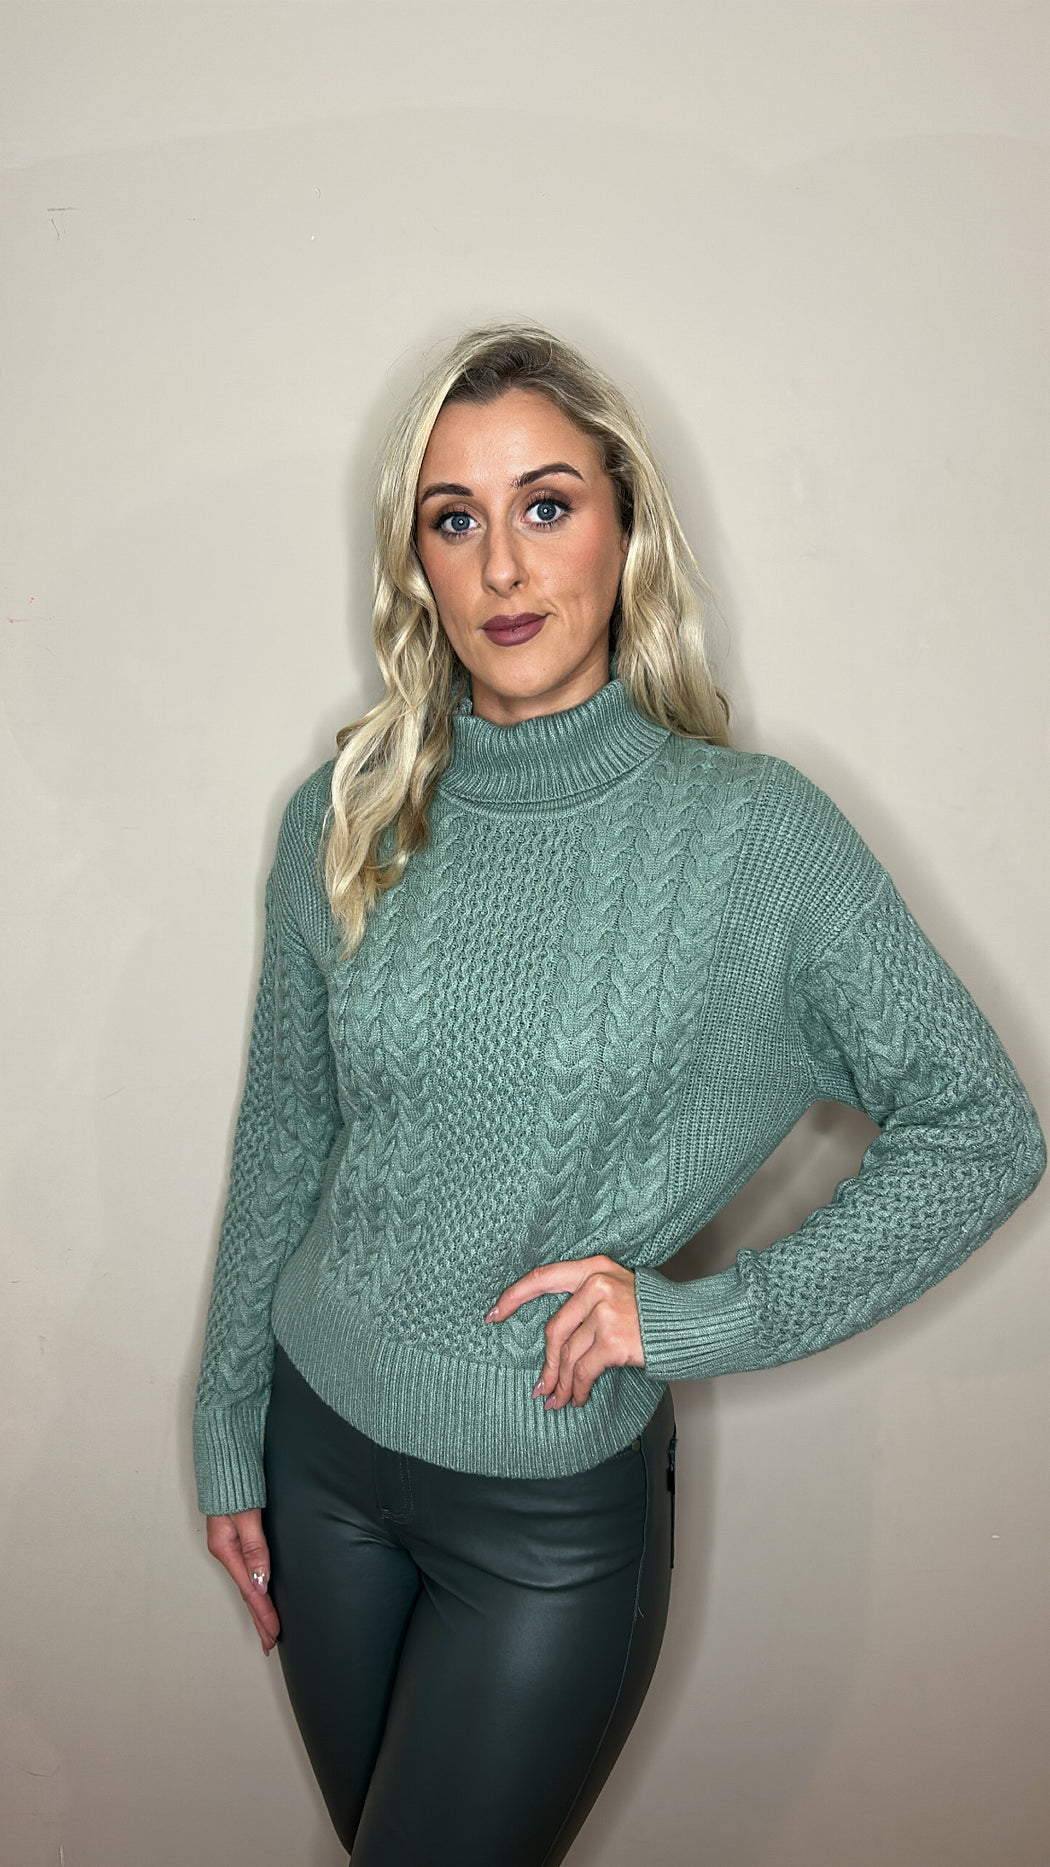 Edwina sage green turtle neck knit jumper